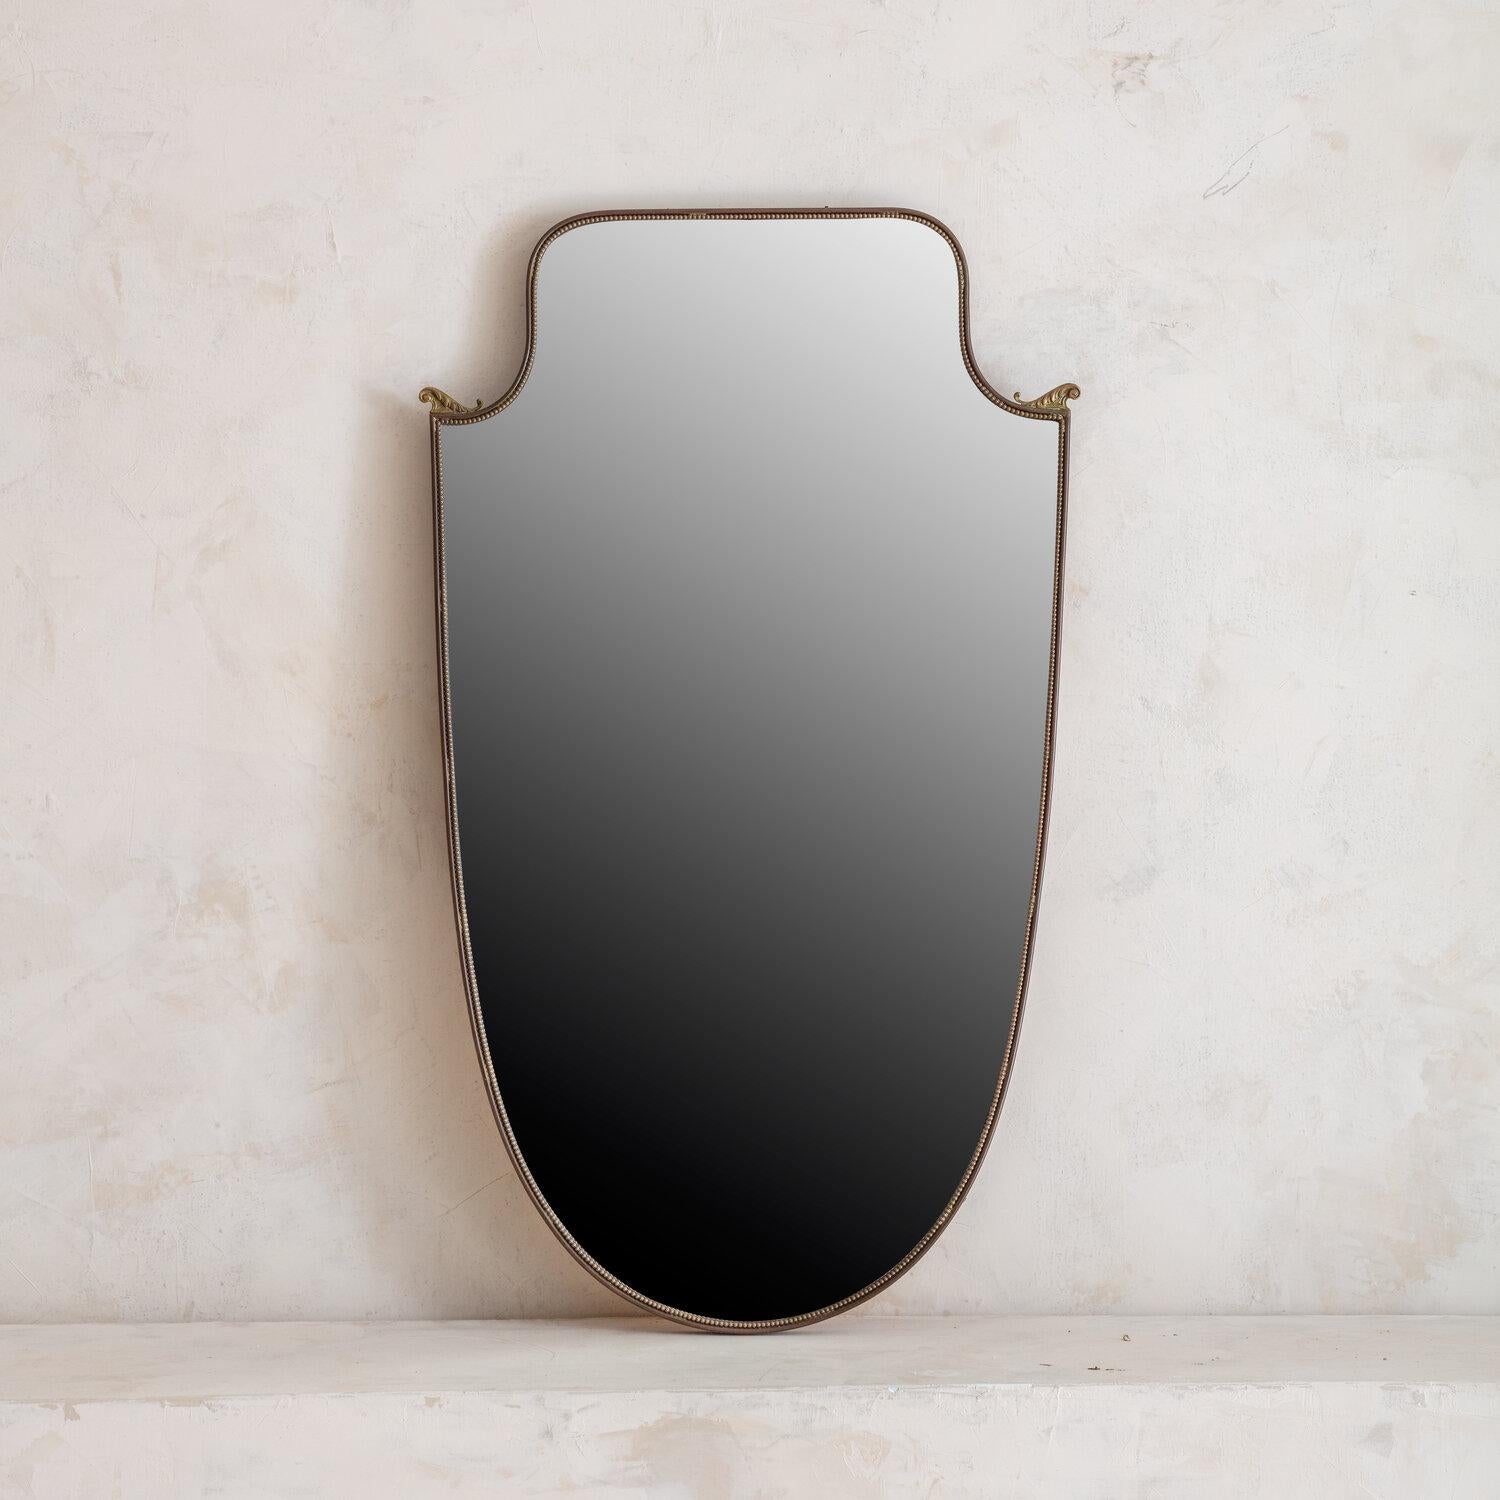 Italian brass shield mirror with corner details.